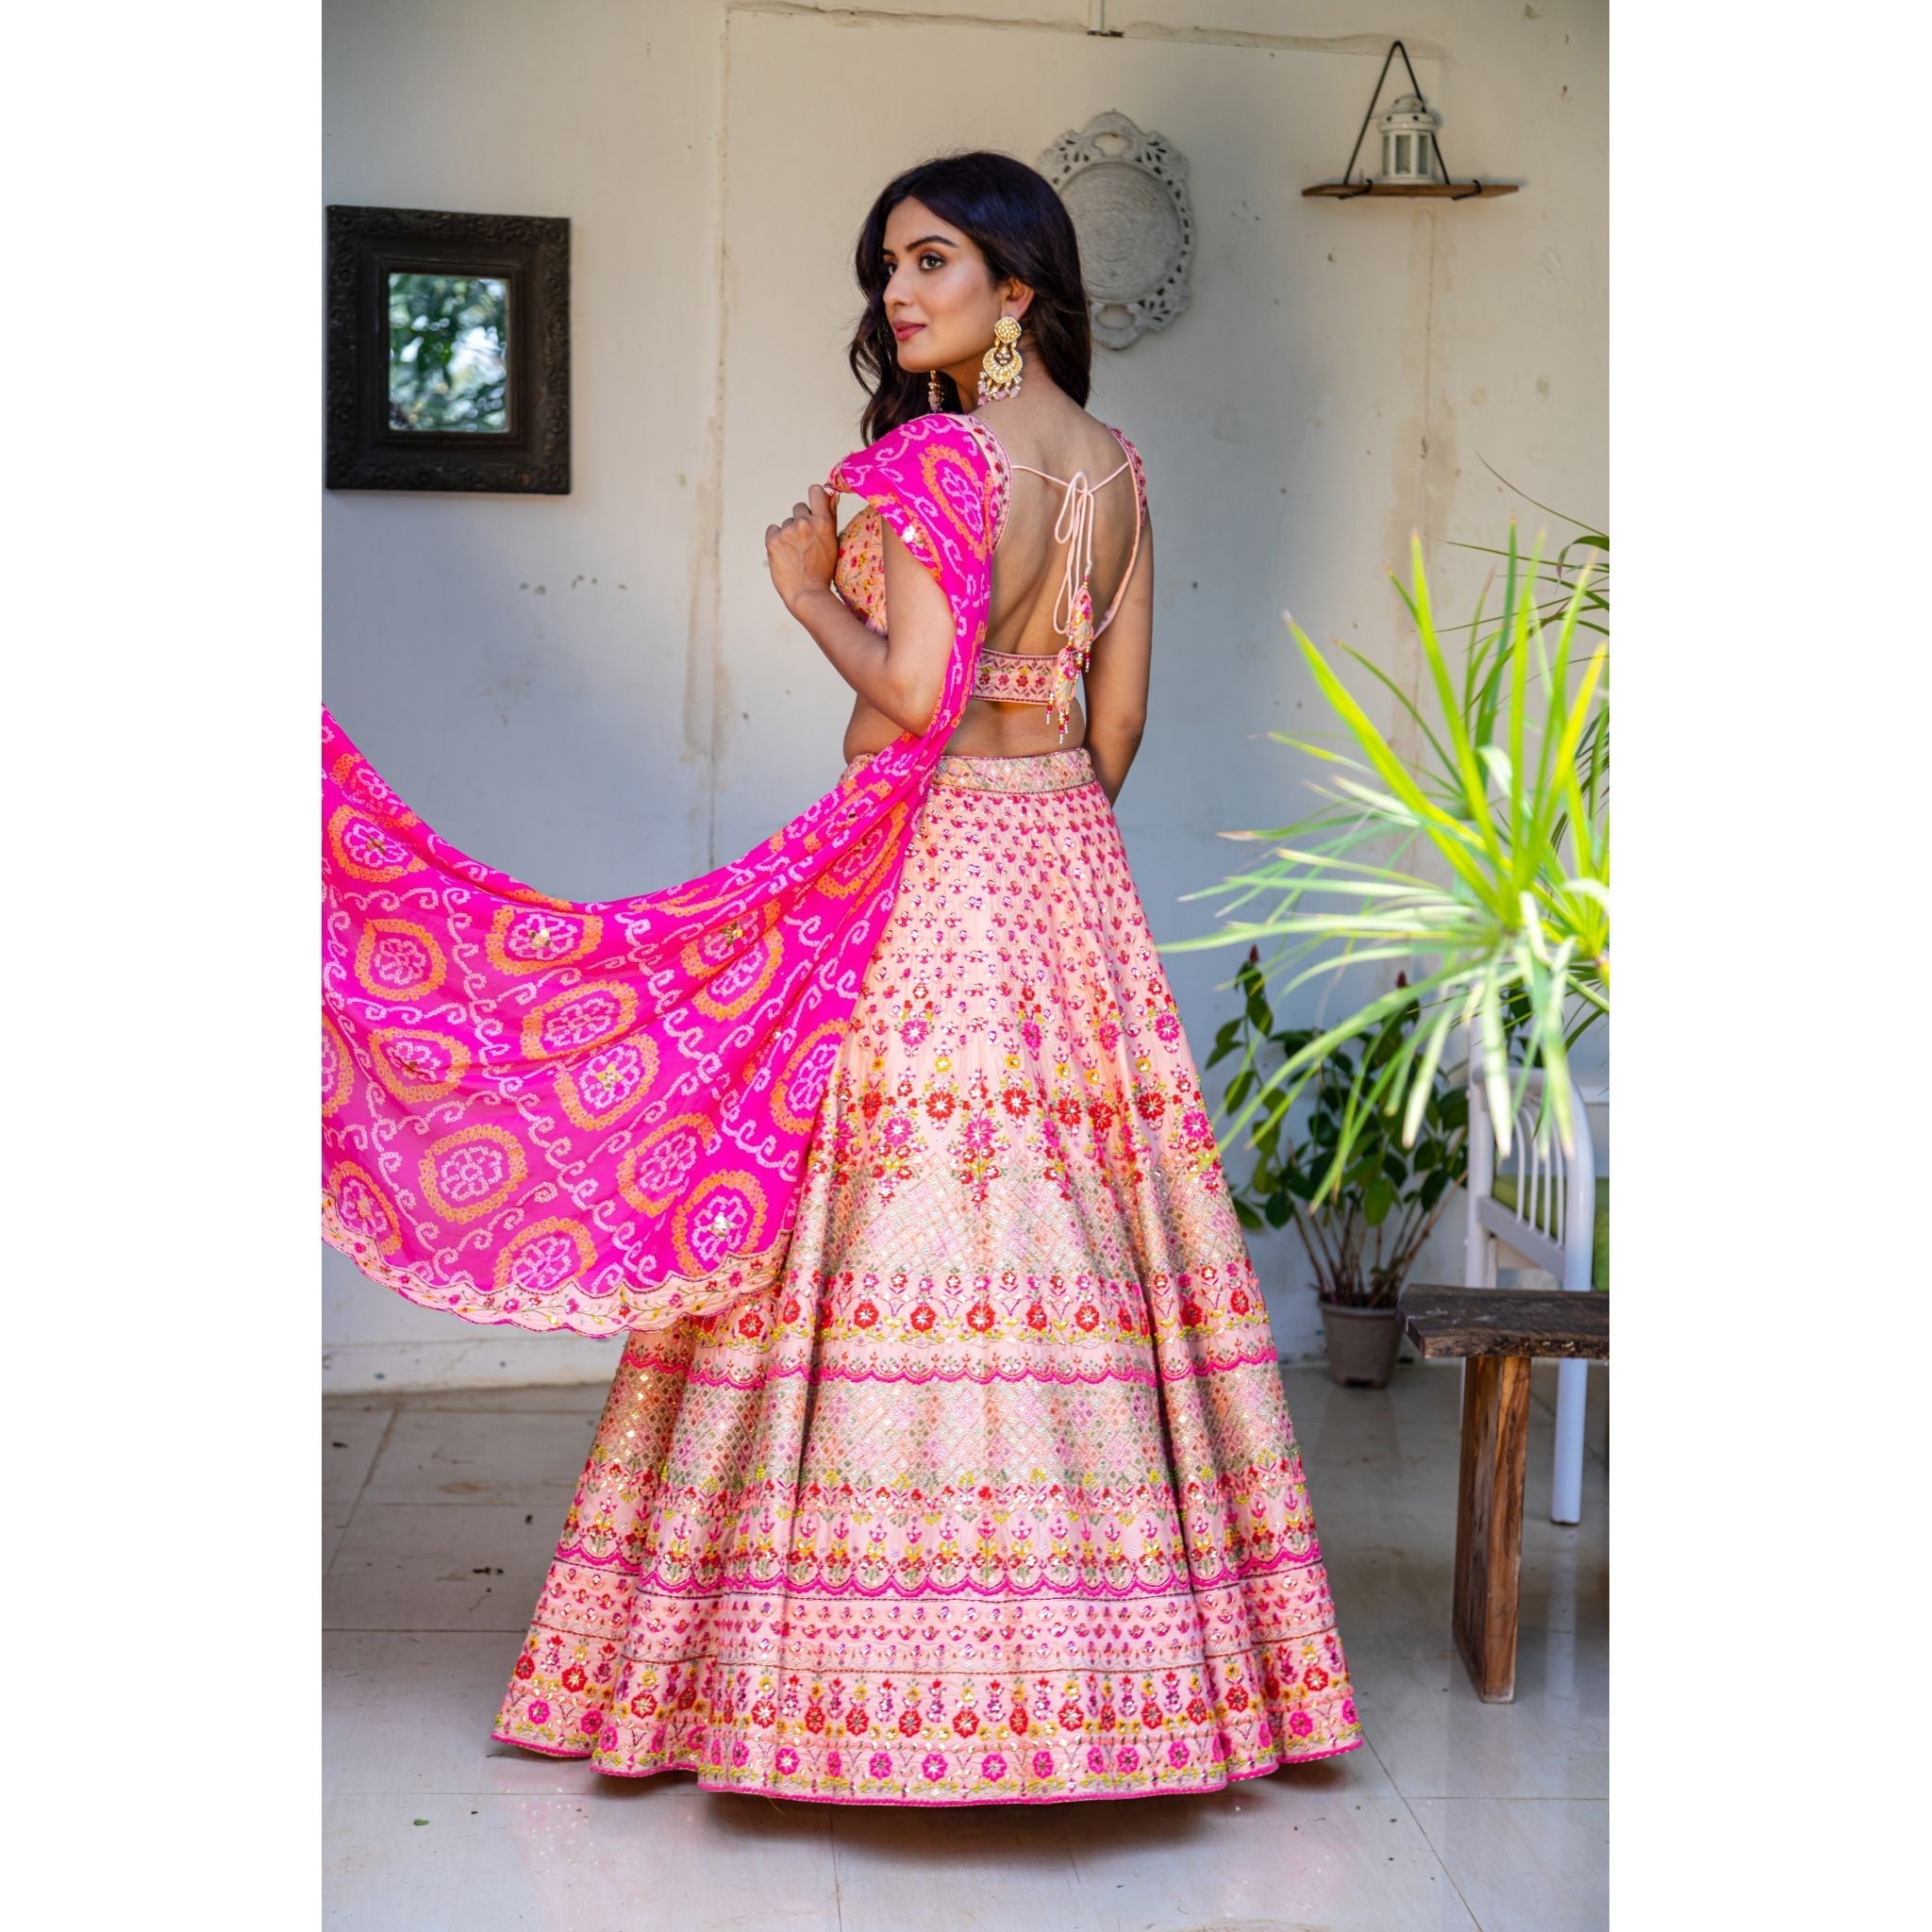 Coral And Pink Resham Lehenga Set - Indian Designer Bridal Wedding Outfit